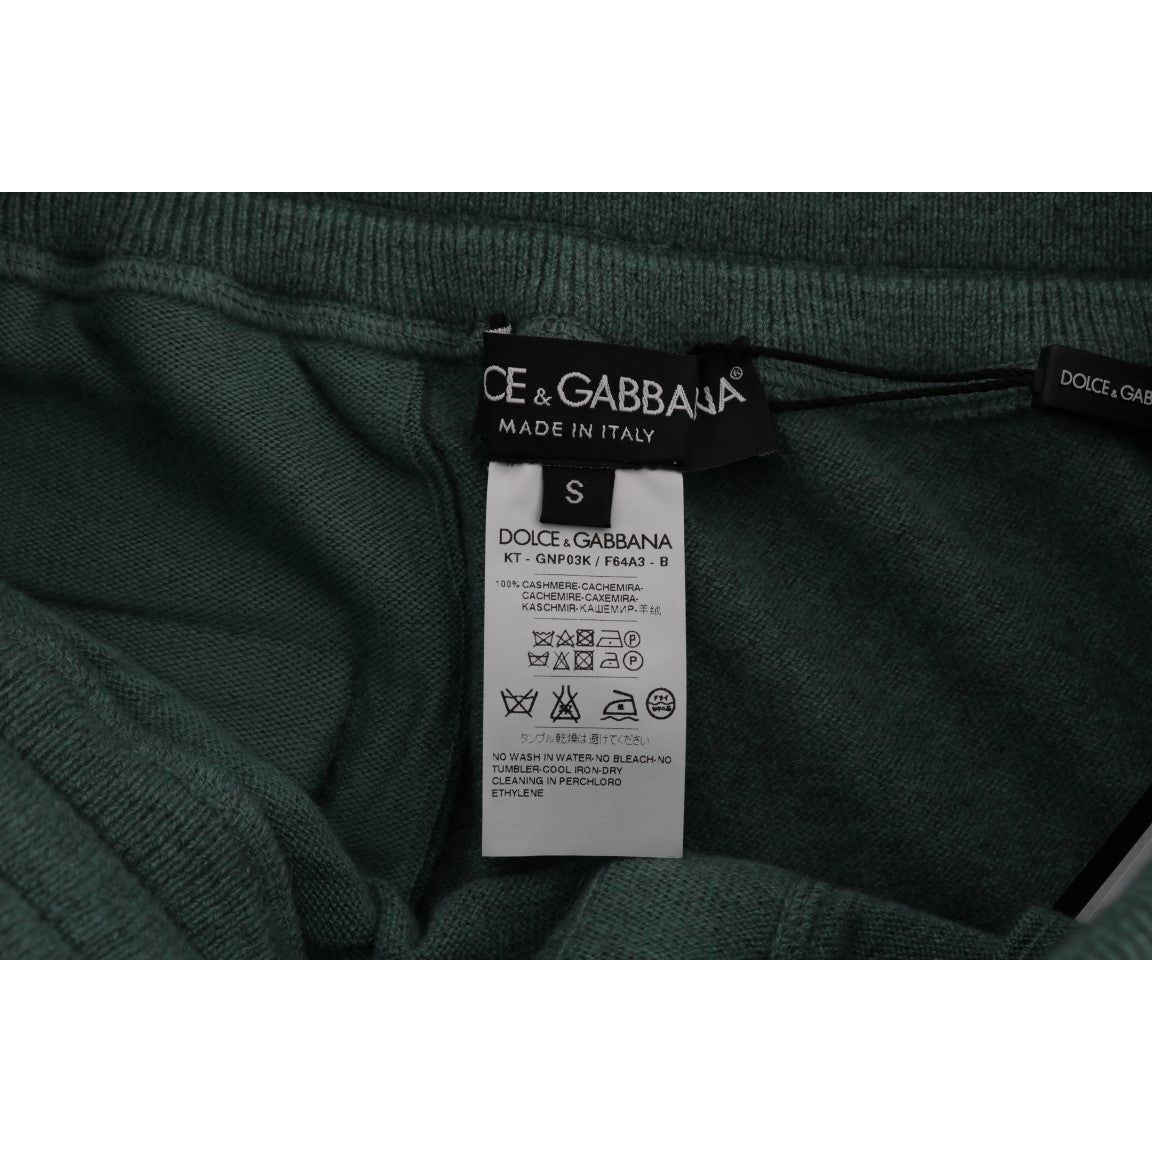 Dolce & Gabbana Elegant Green Cashmere Sport Pants green-cashmere-training-pants 346330-green-cashmere-training-pants-5.jpg